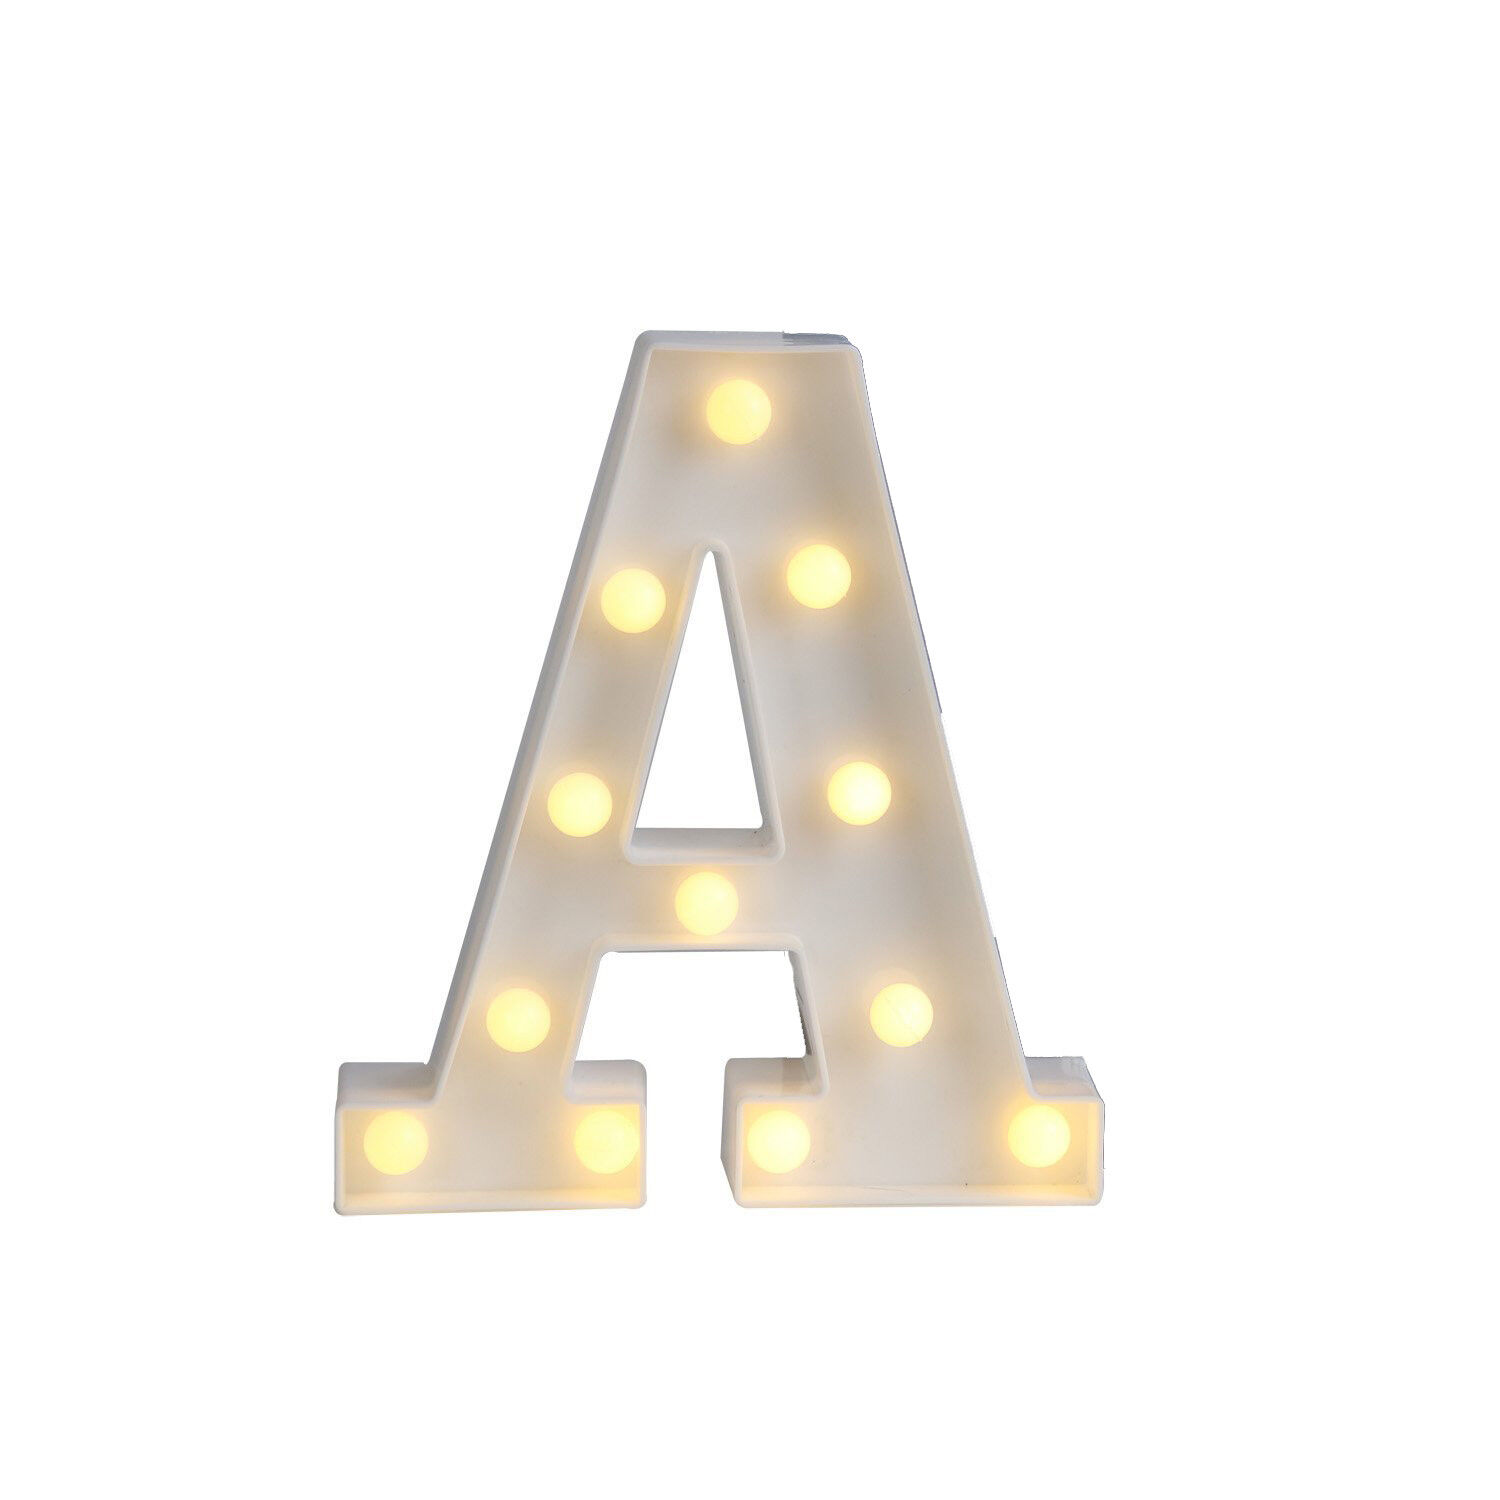 Light Up Letter LED Alphabet PlasticParty Sign Wedding Festival Stand Decoration